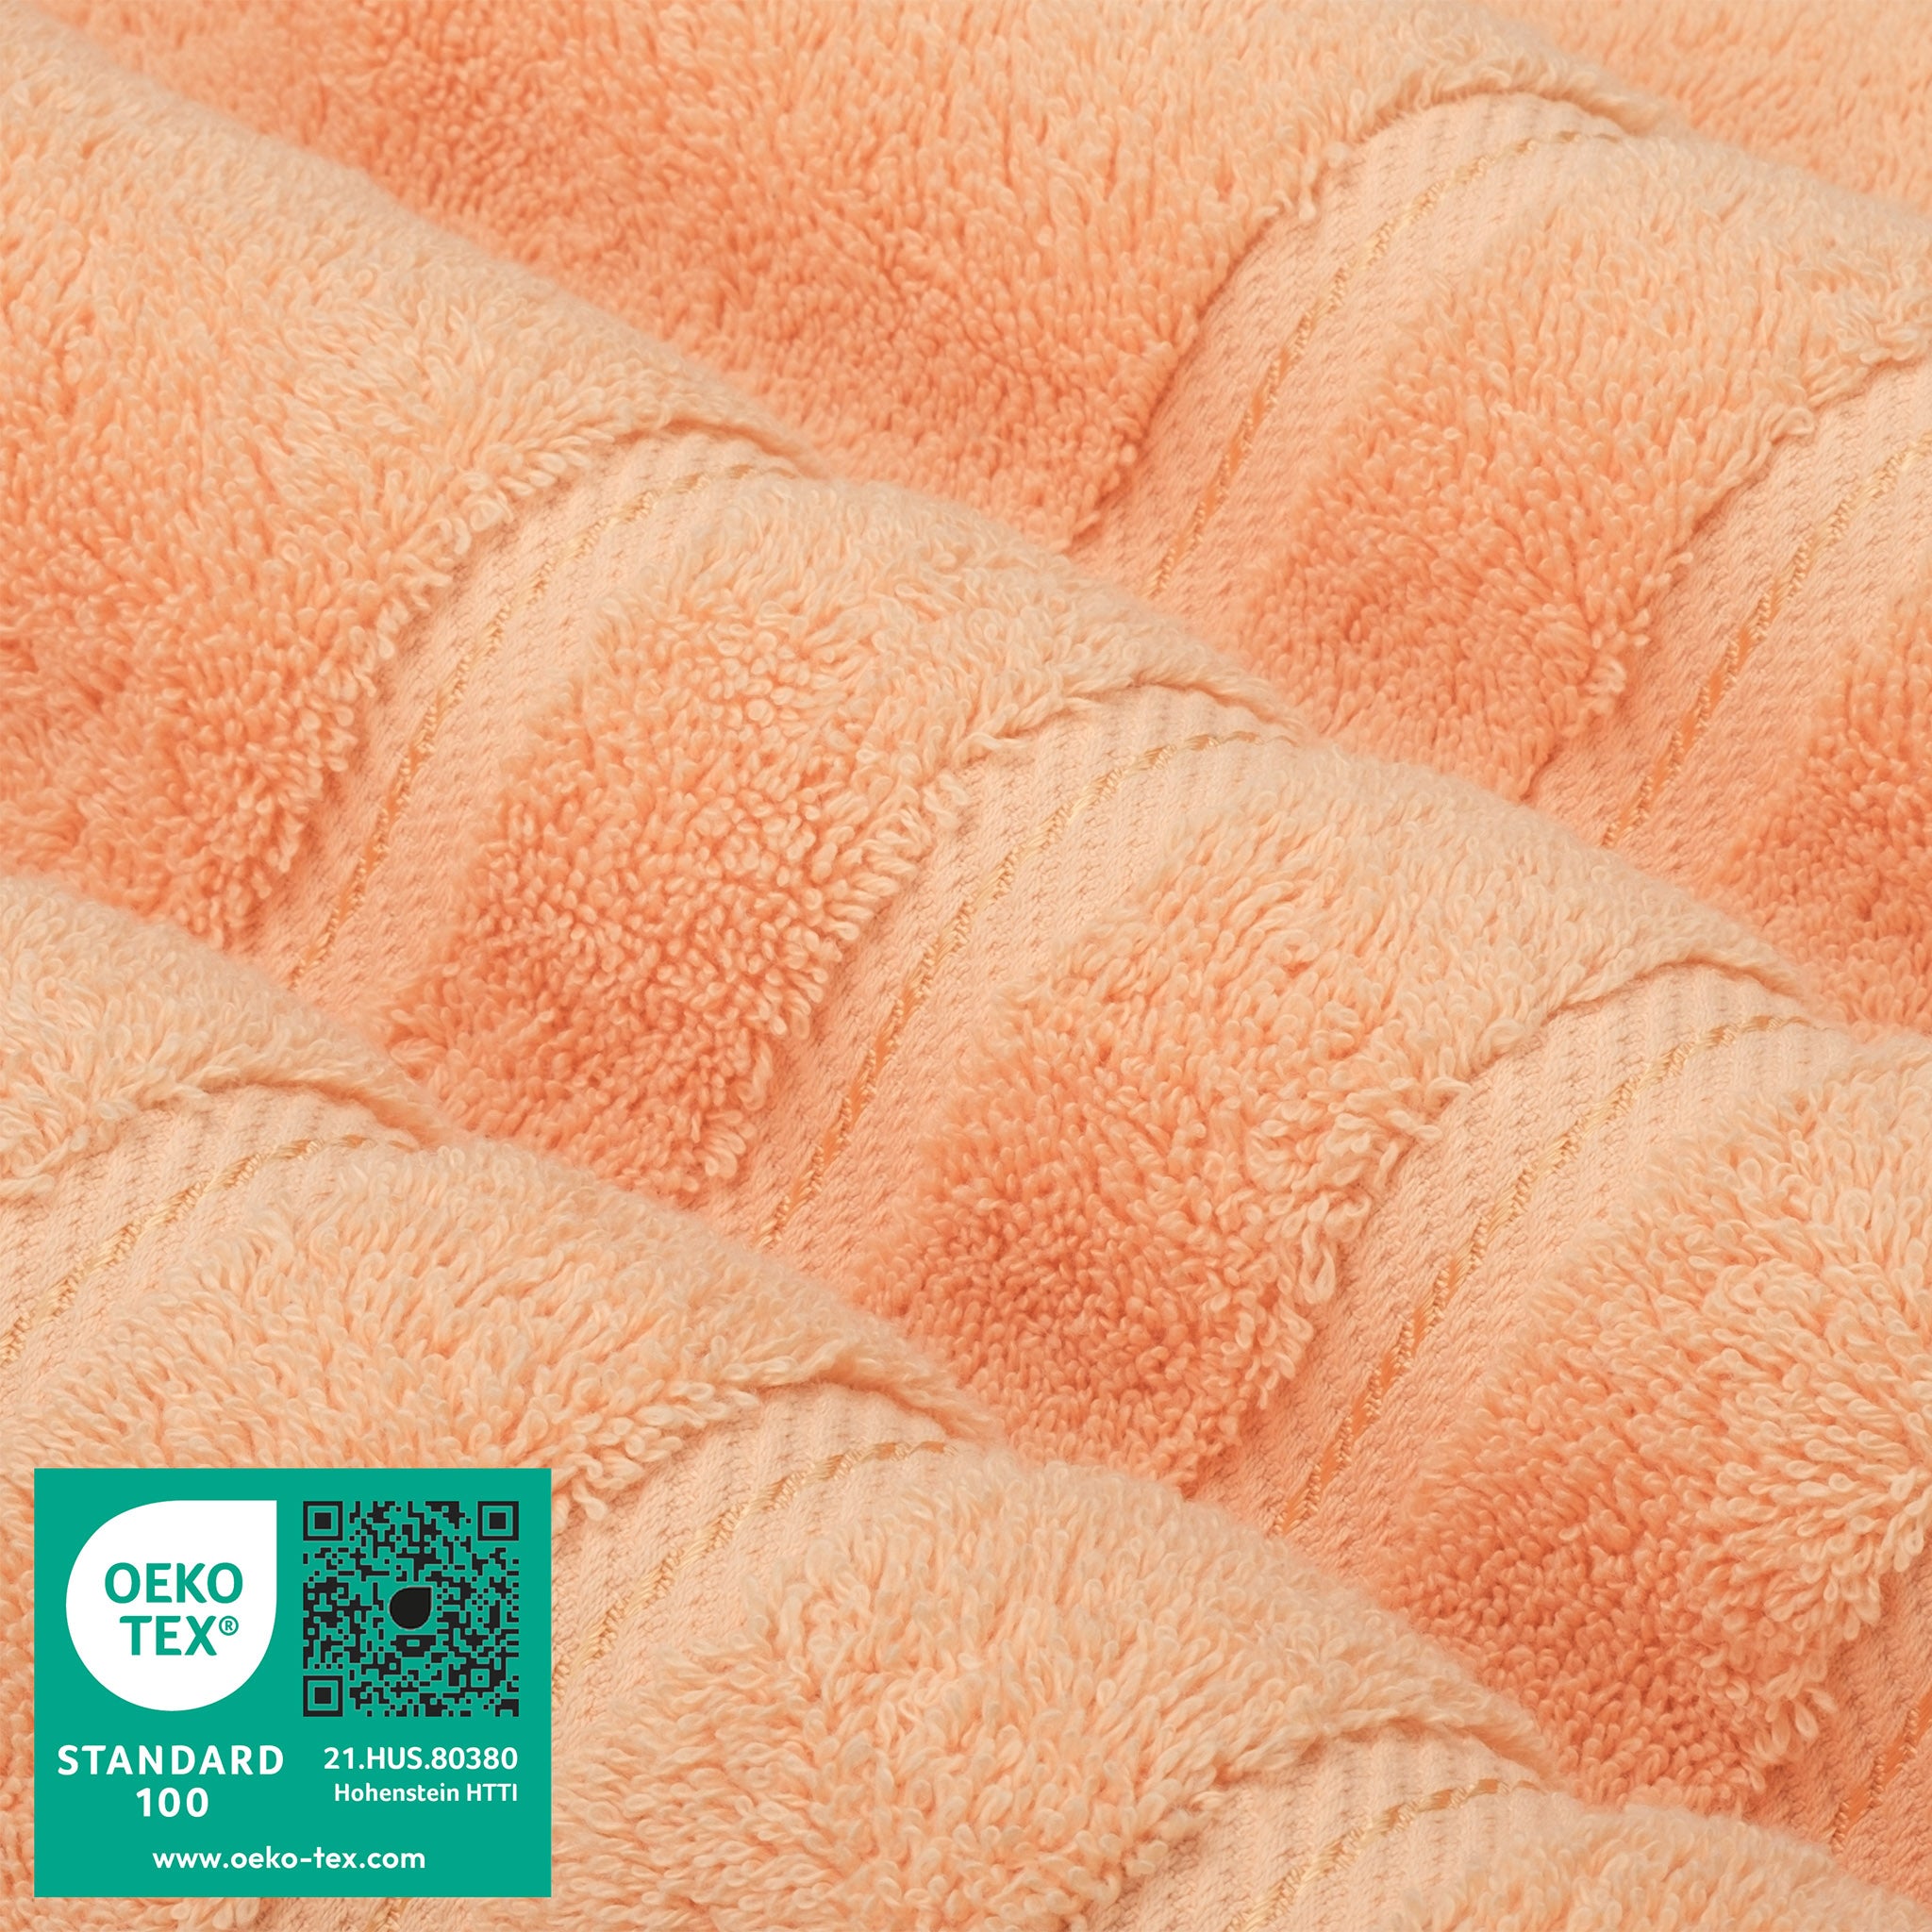  American Soft Linen 100% Turkish Cotton 4 Pack Hand Towel Set  malibu-peach-3